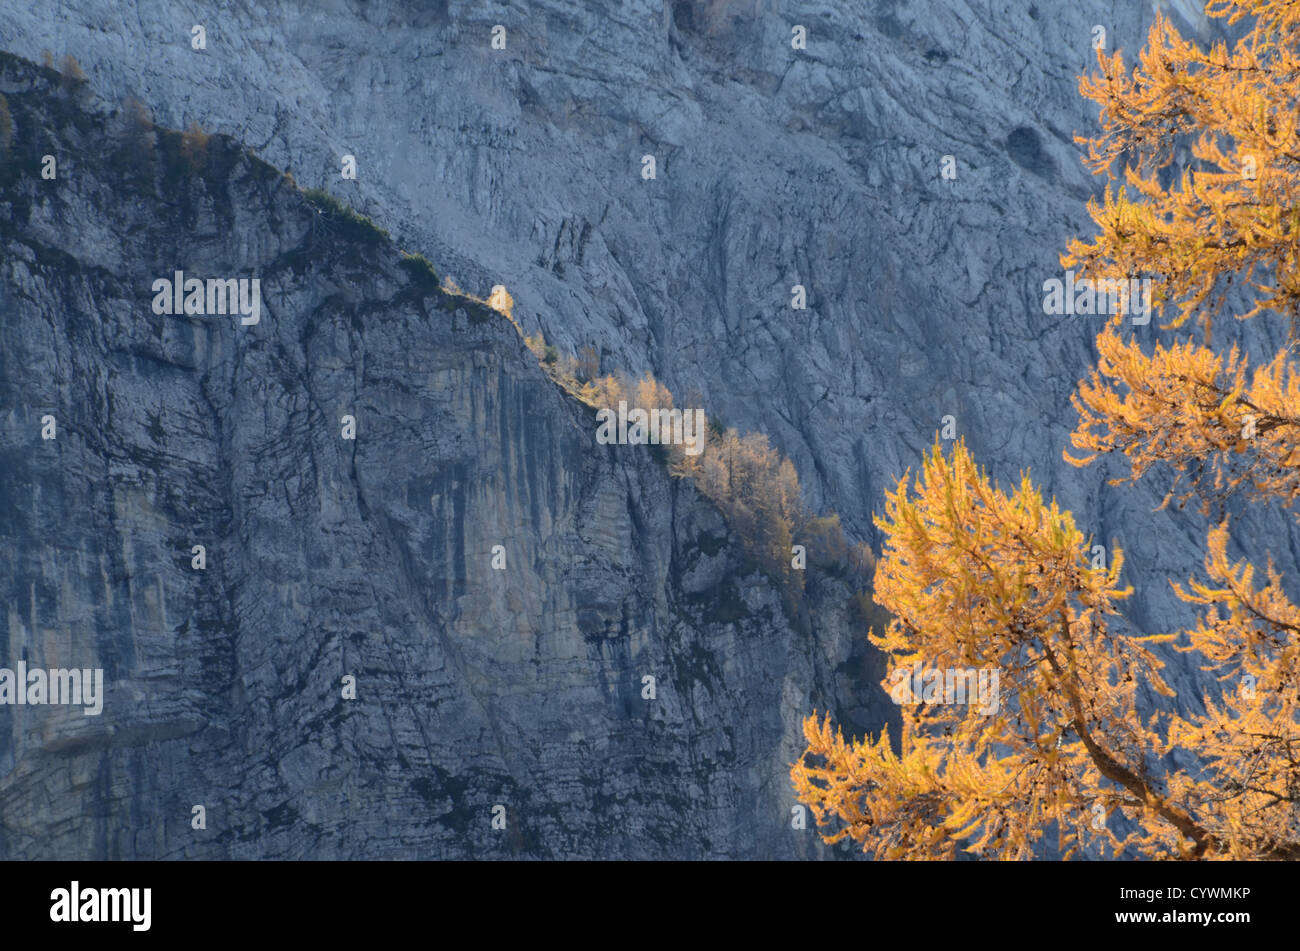 Sleme at Julian Alps, Slovenia Stock Photo